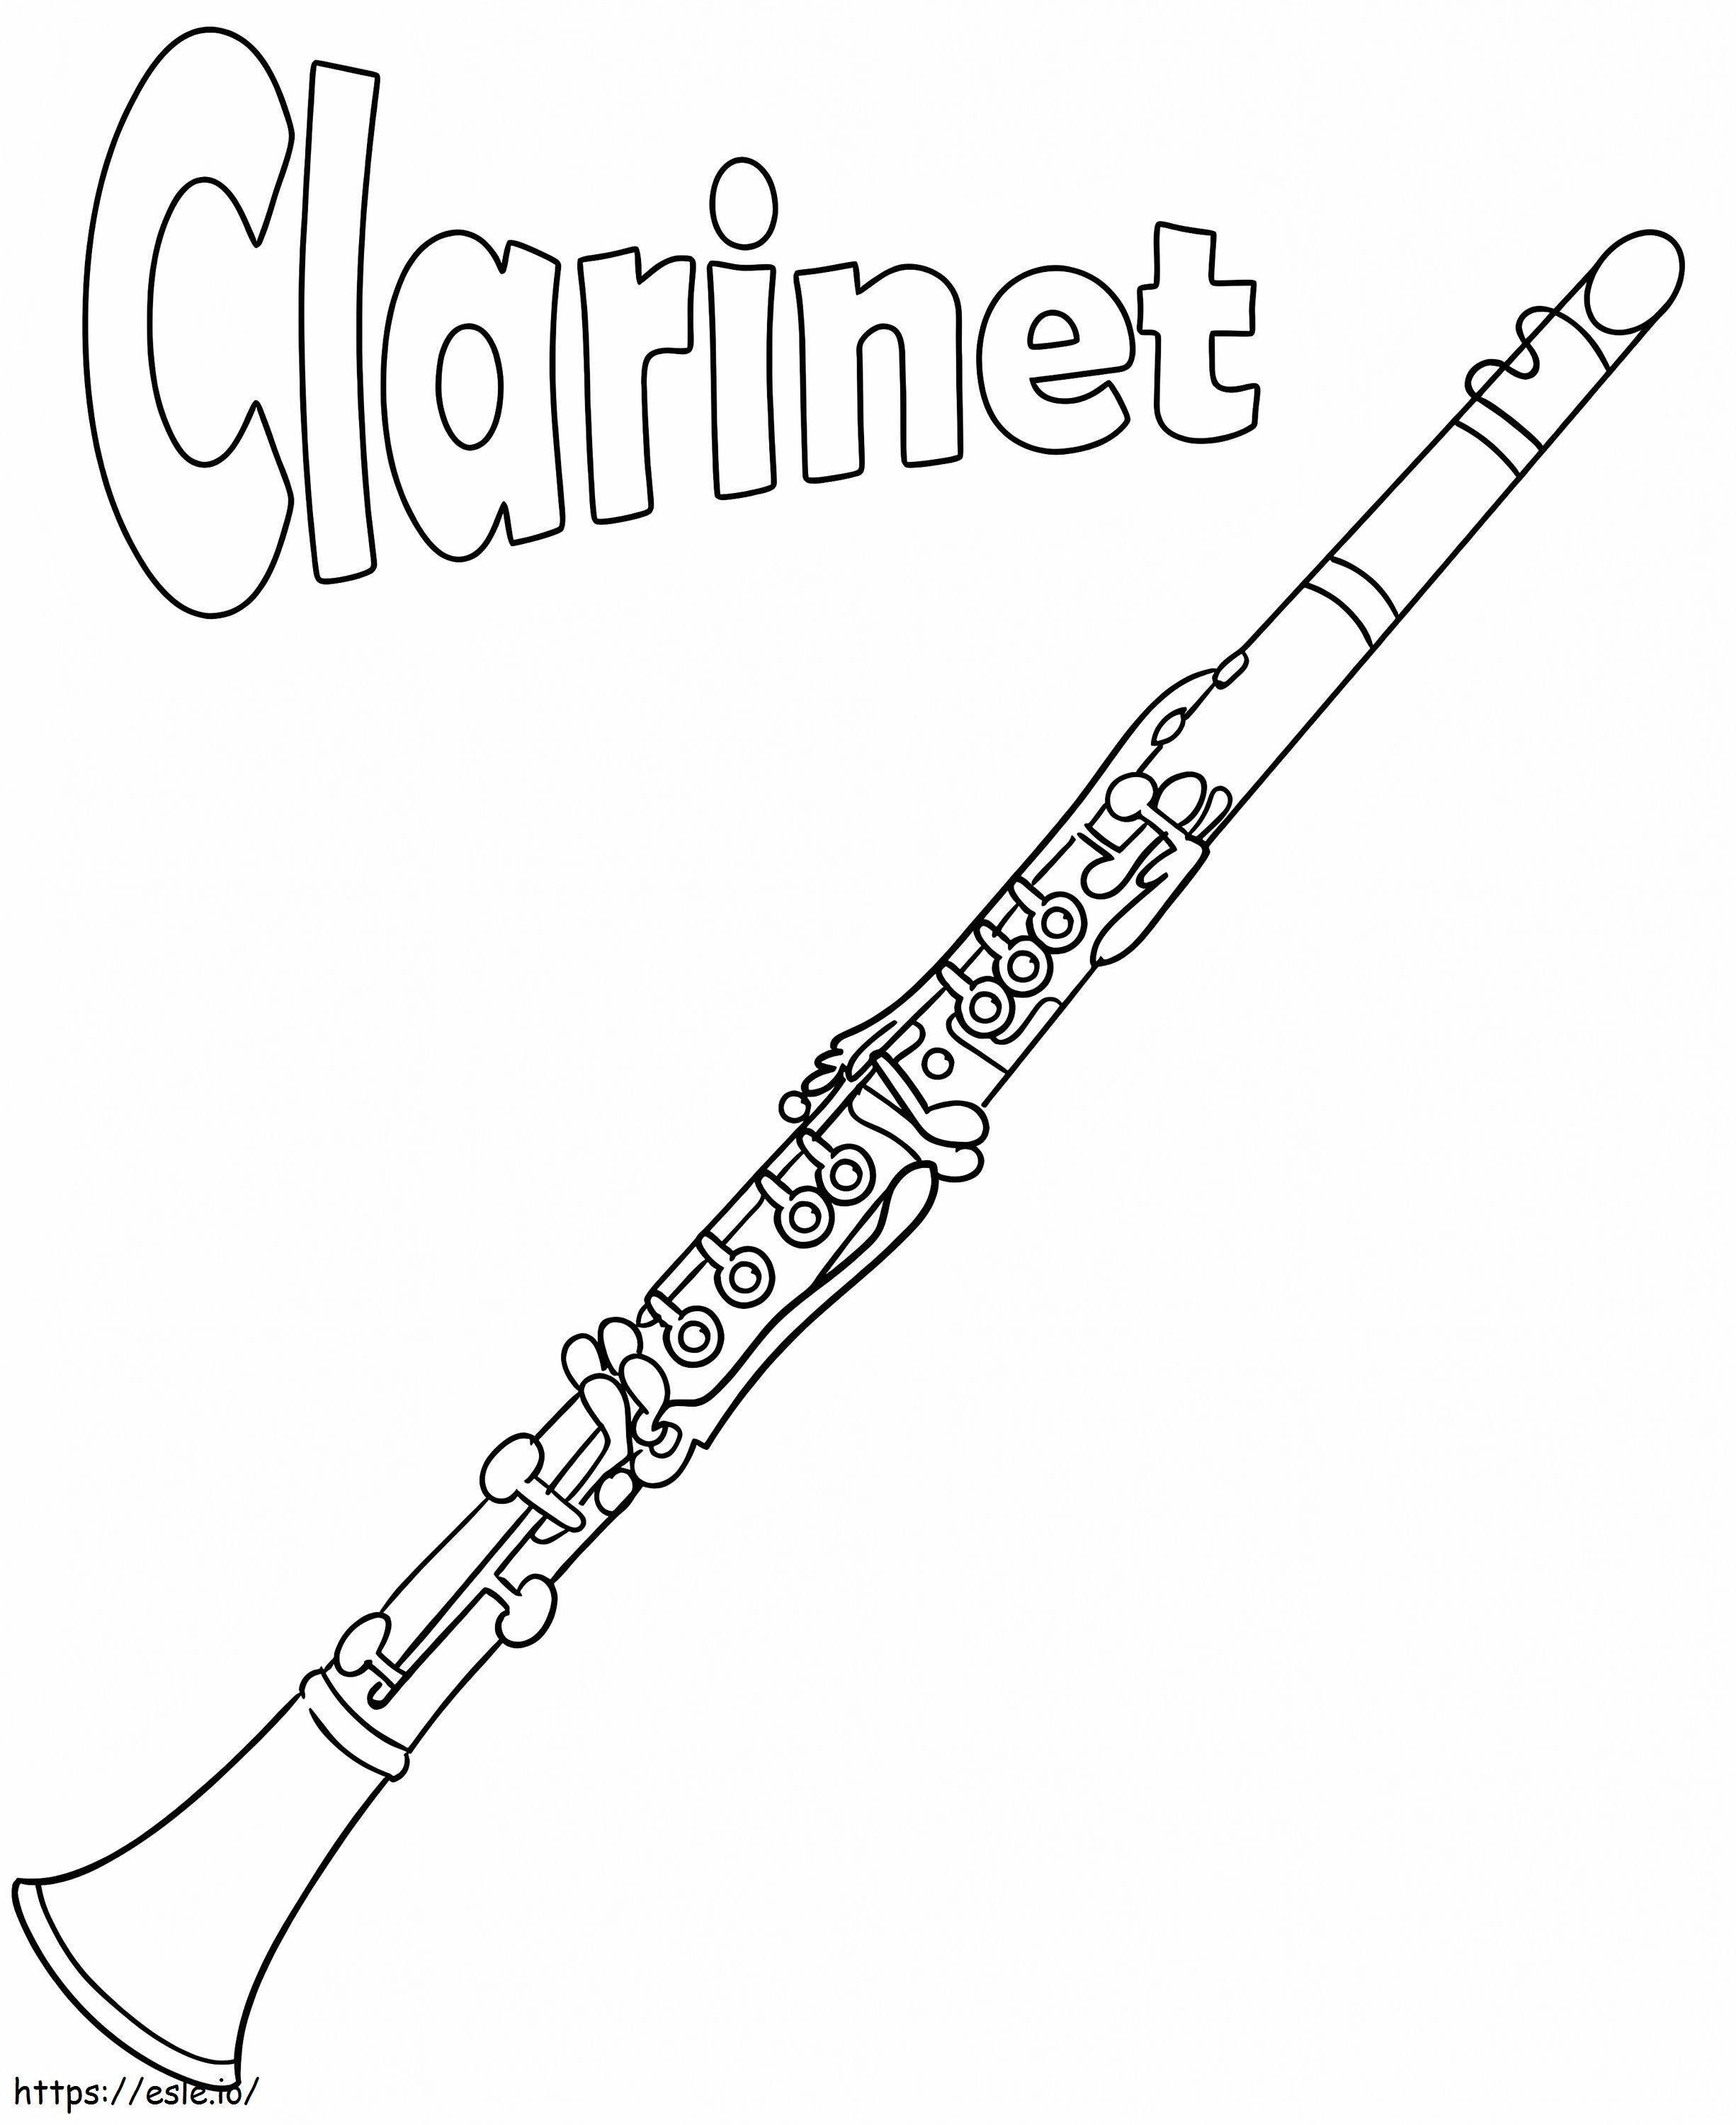 Clarinete imprimível para colorir